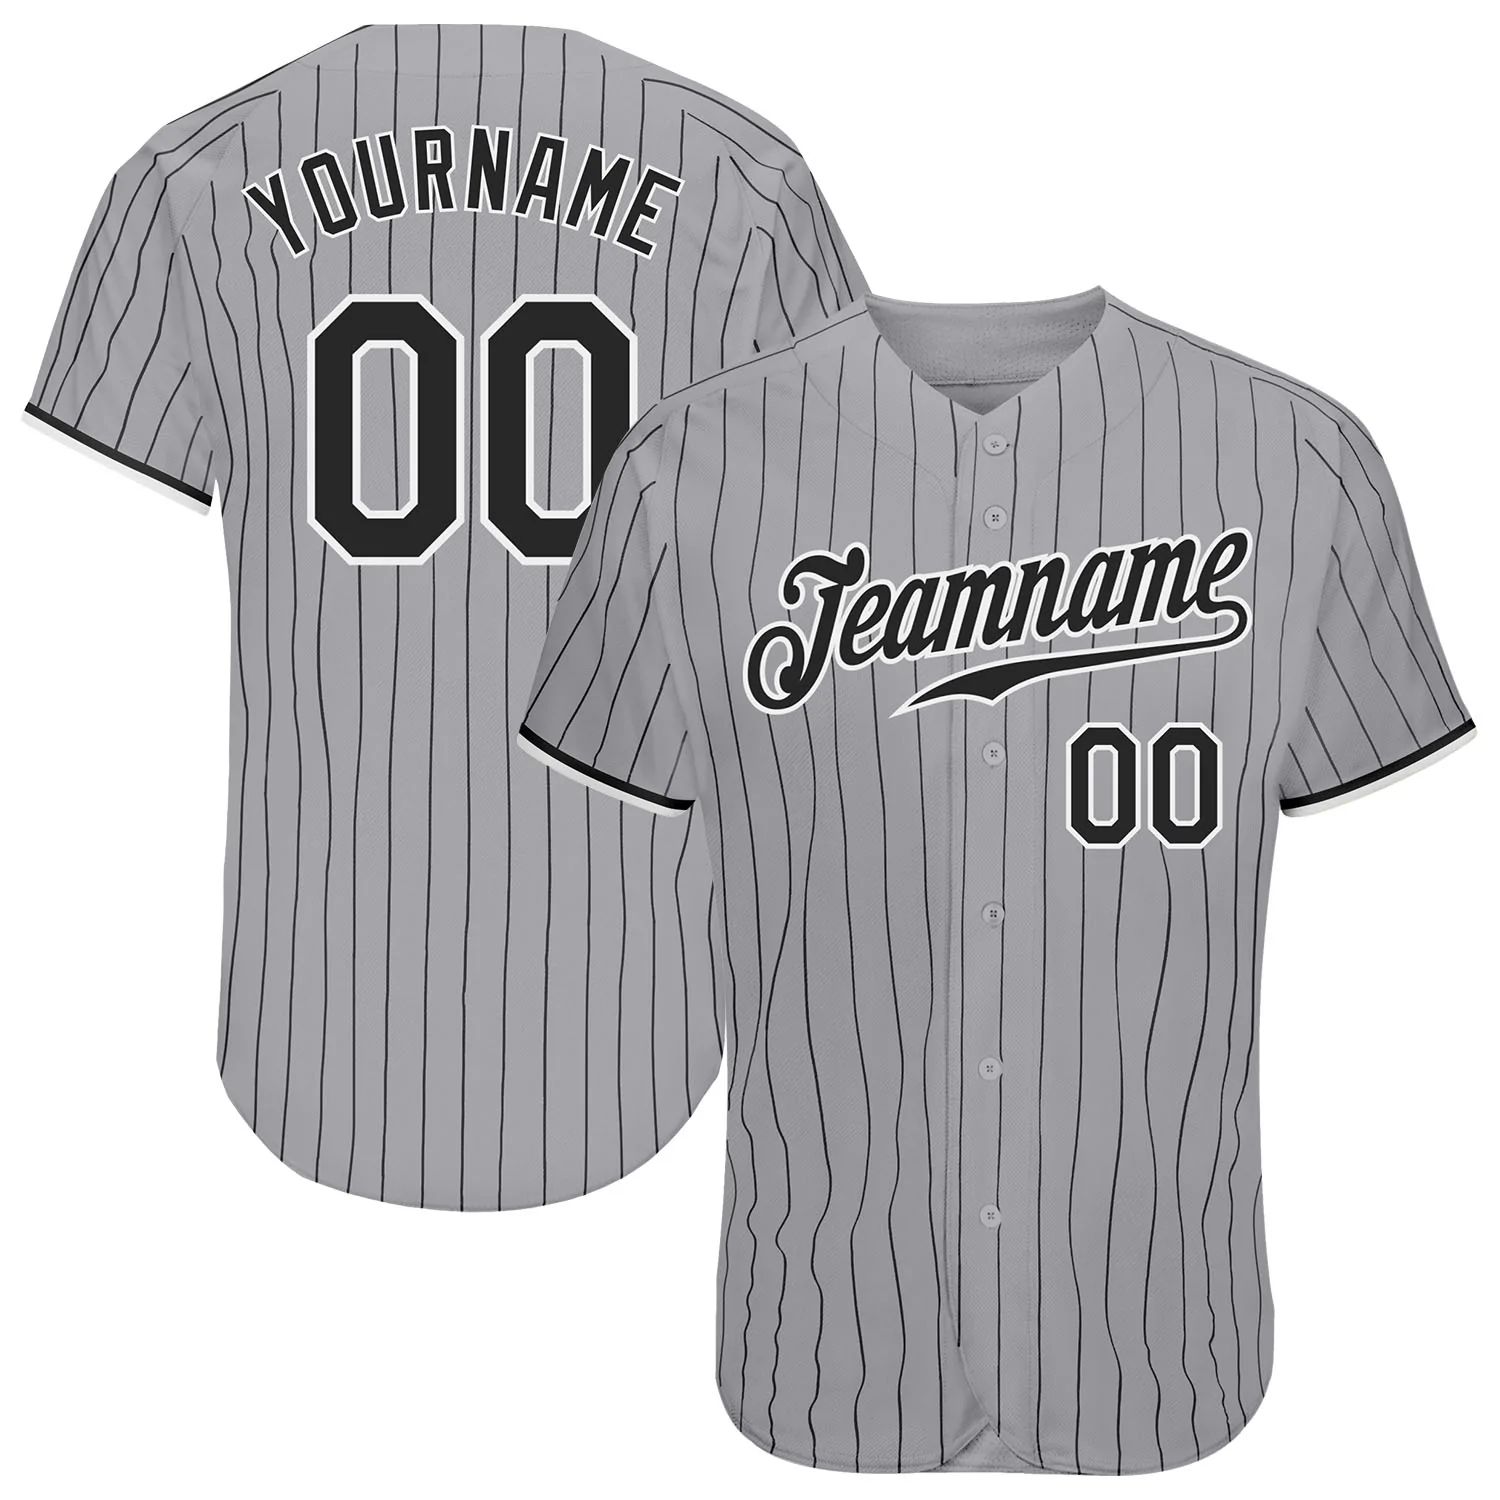 build-white-gray-baseball-black-jersey-authentic-gray0167-online-1.jpg